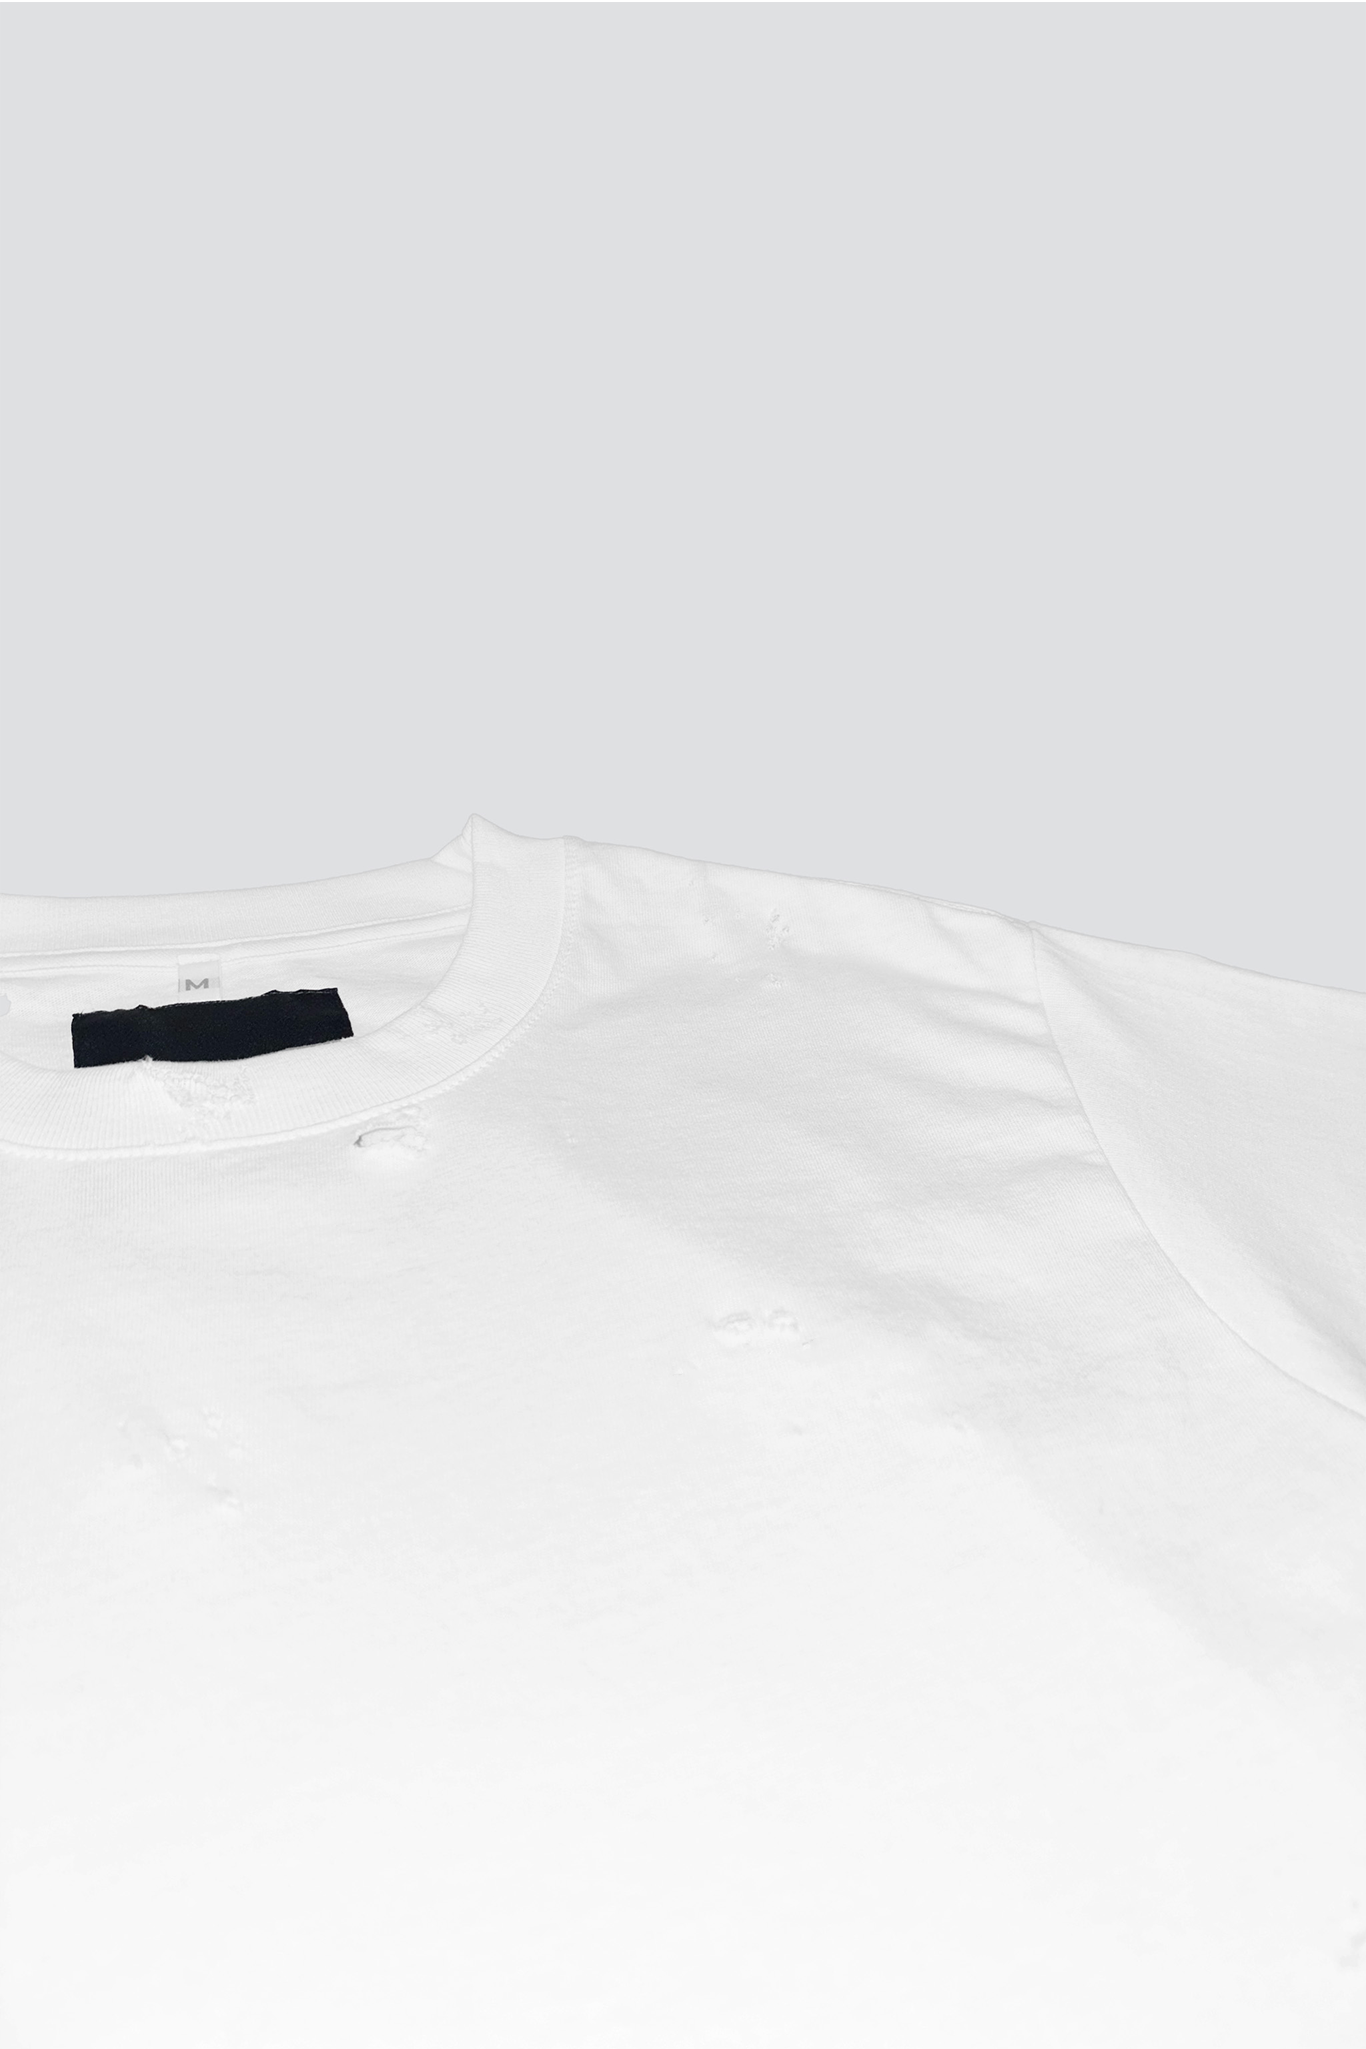 Distressed White T-Shirt